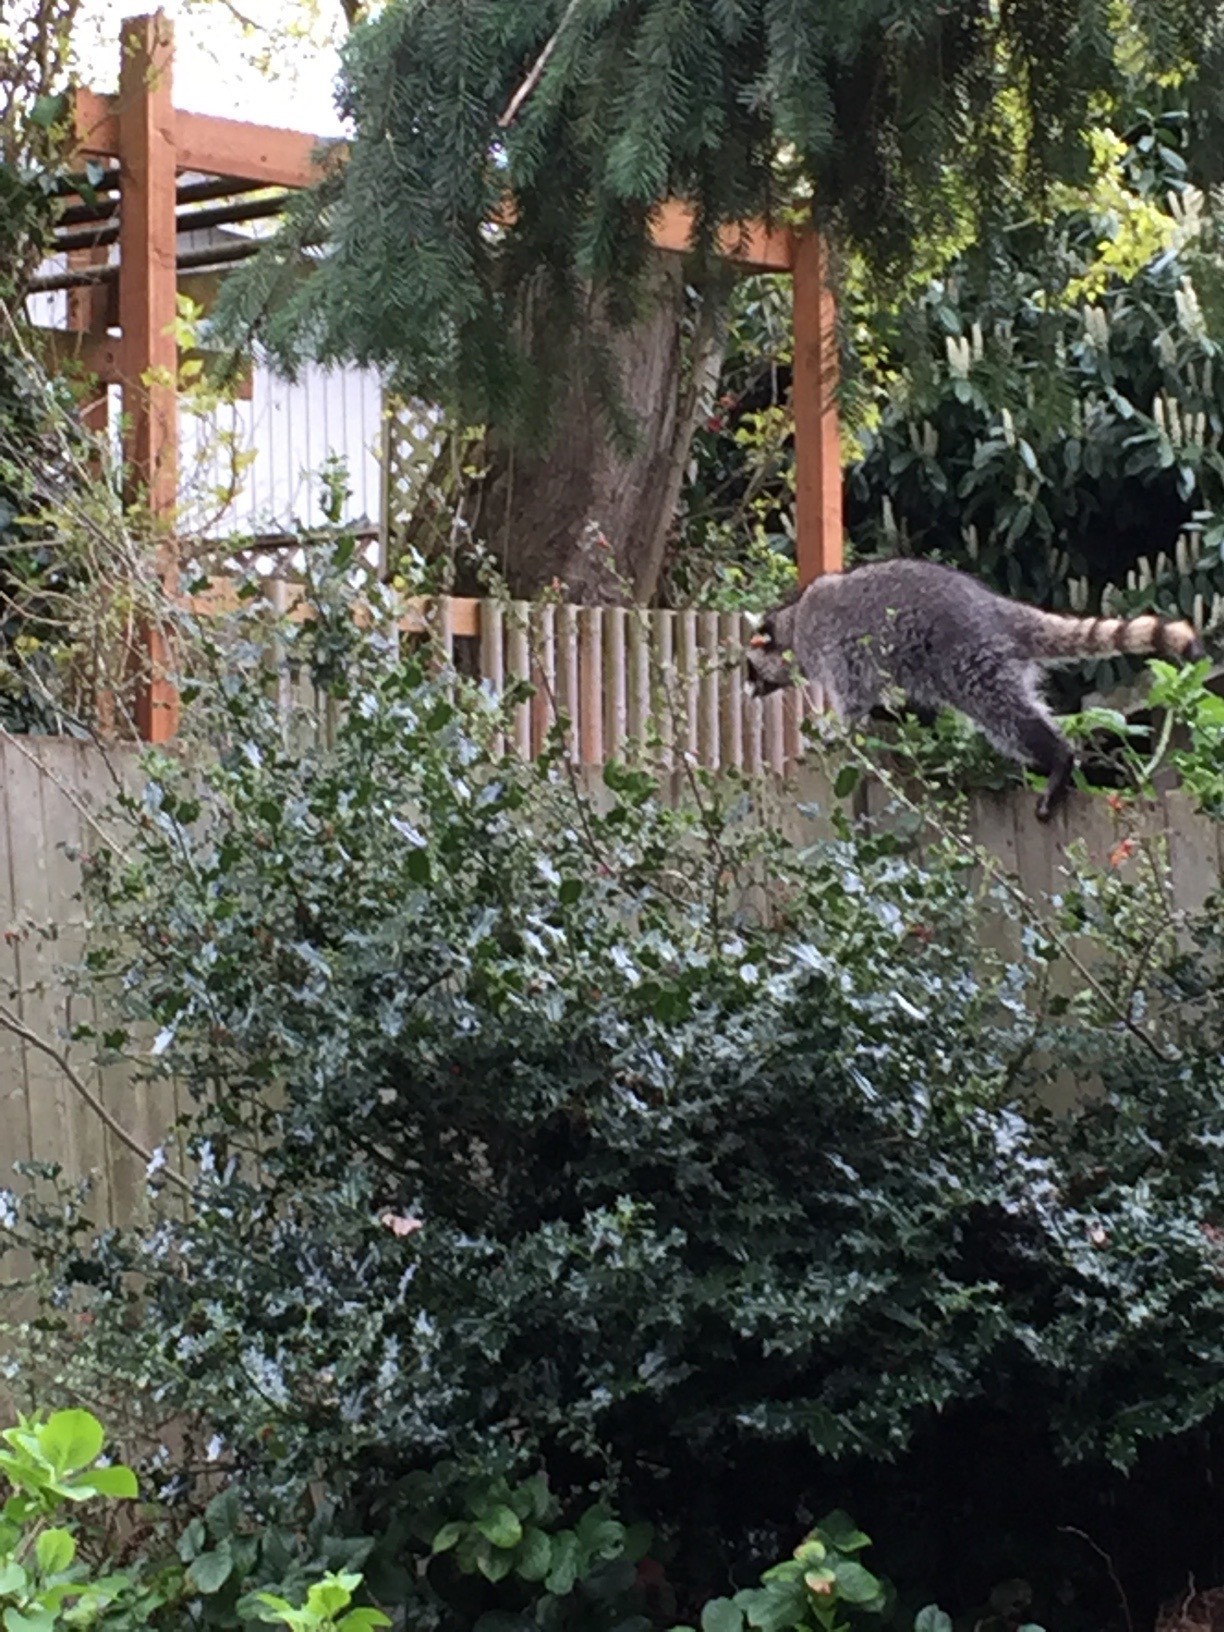 Raccoon walking along a fence.